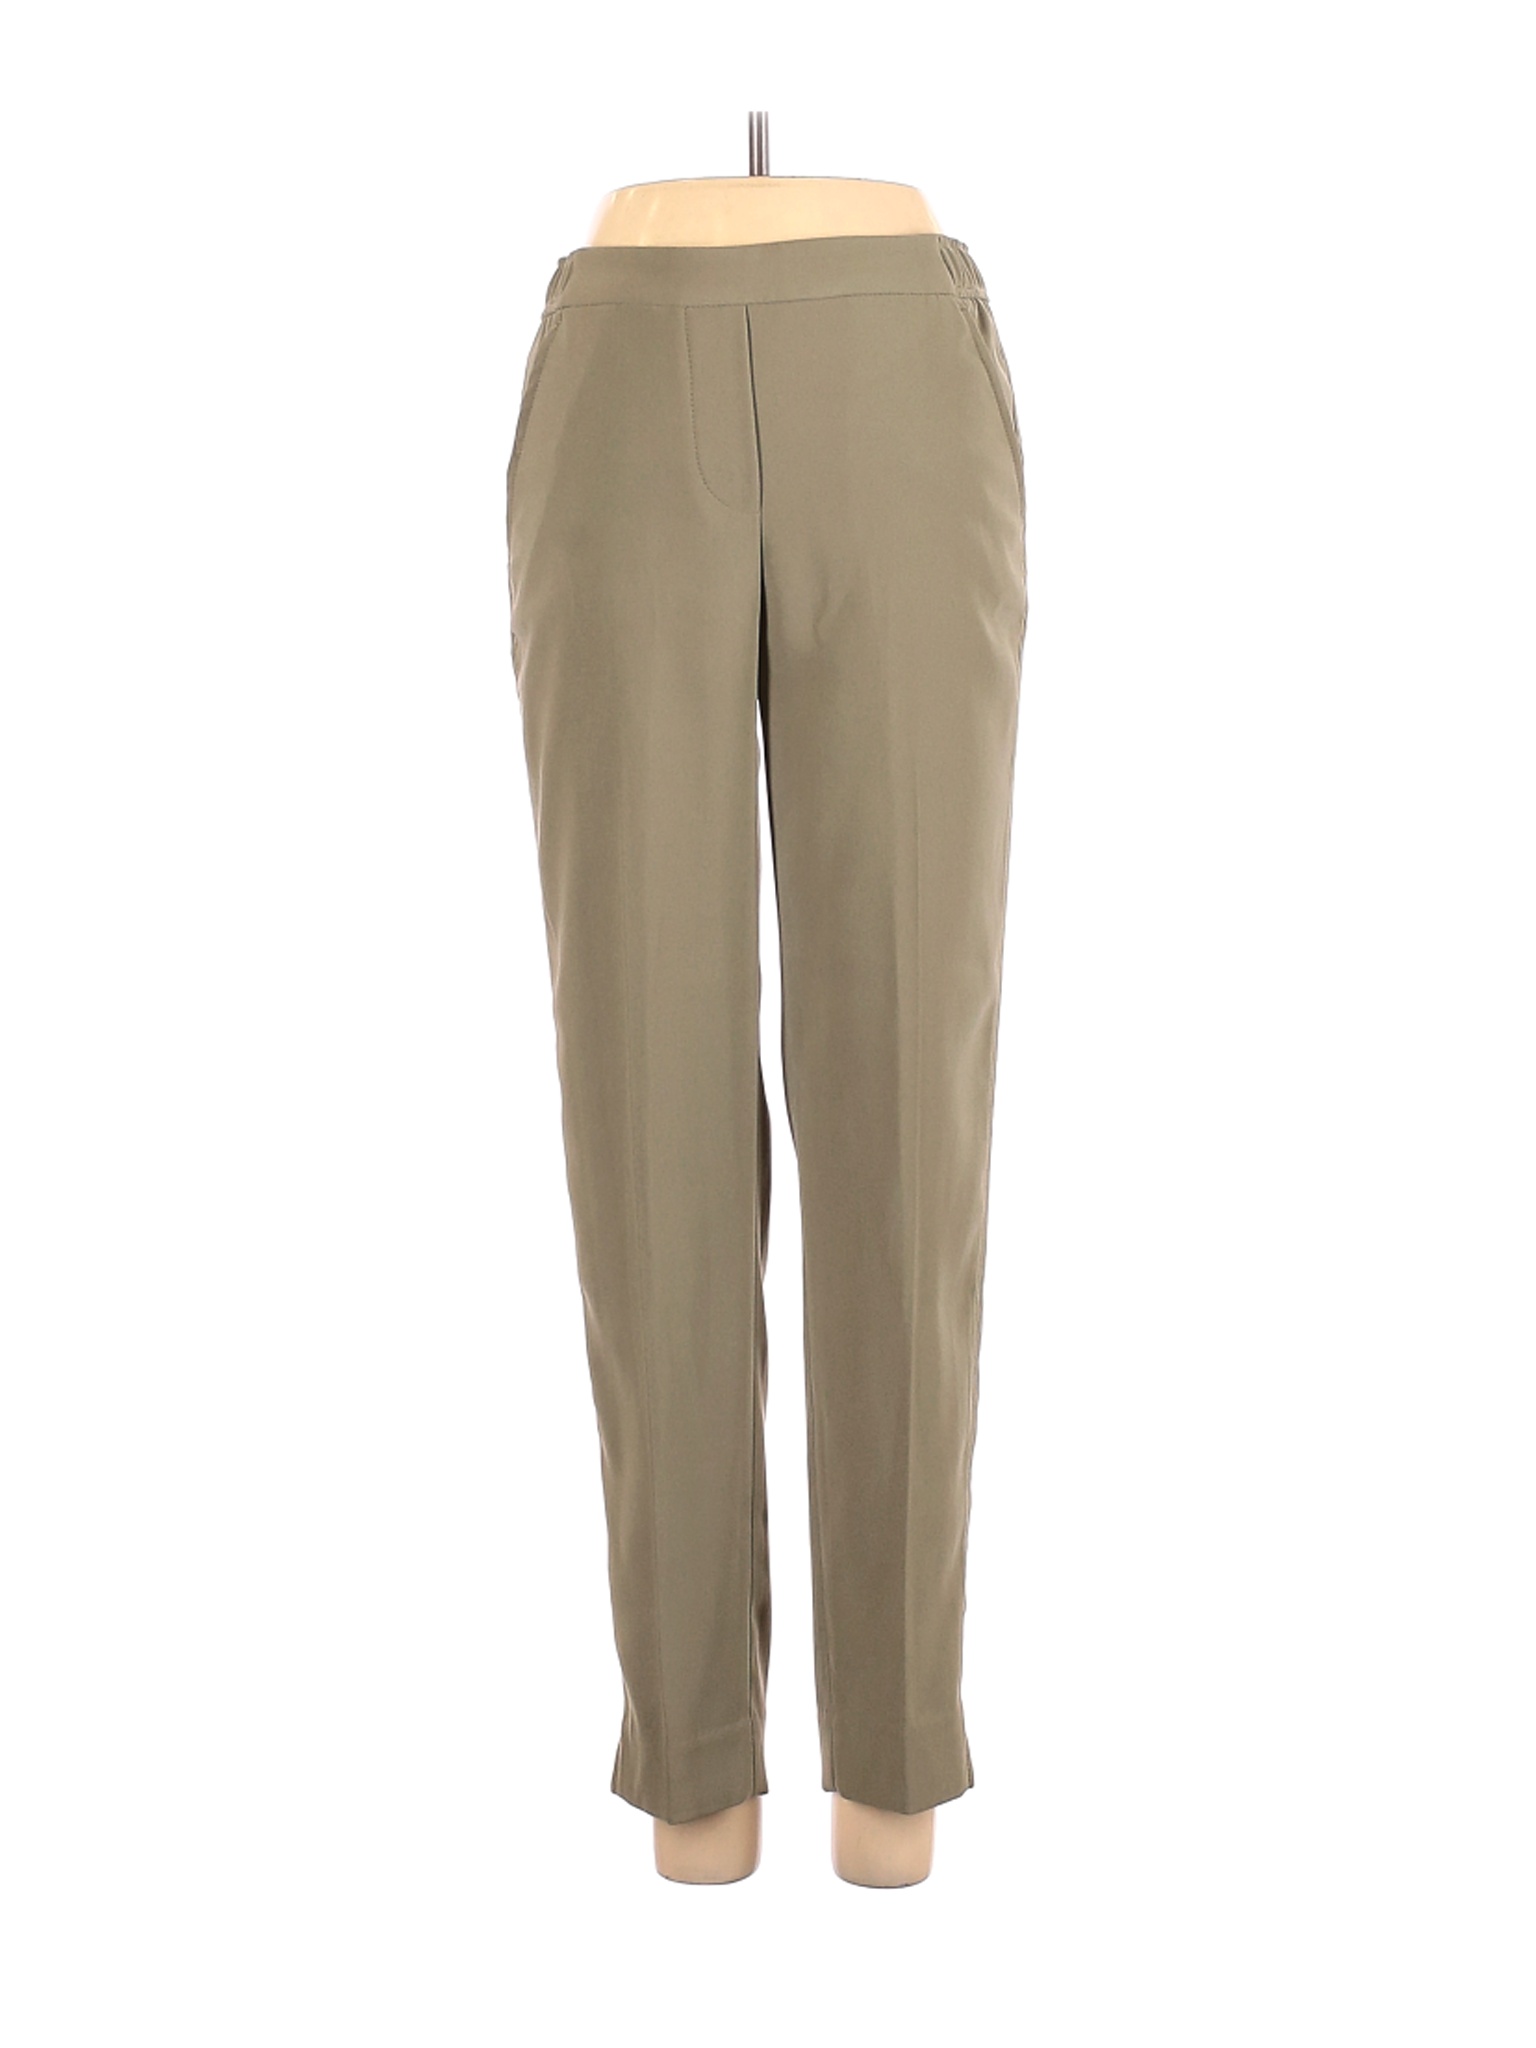 White House Black Market Women Green Casual Pants 00 | eBay